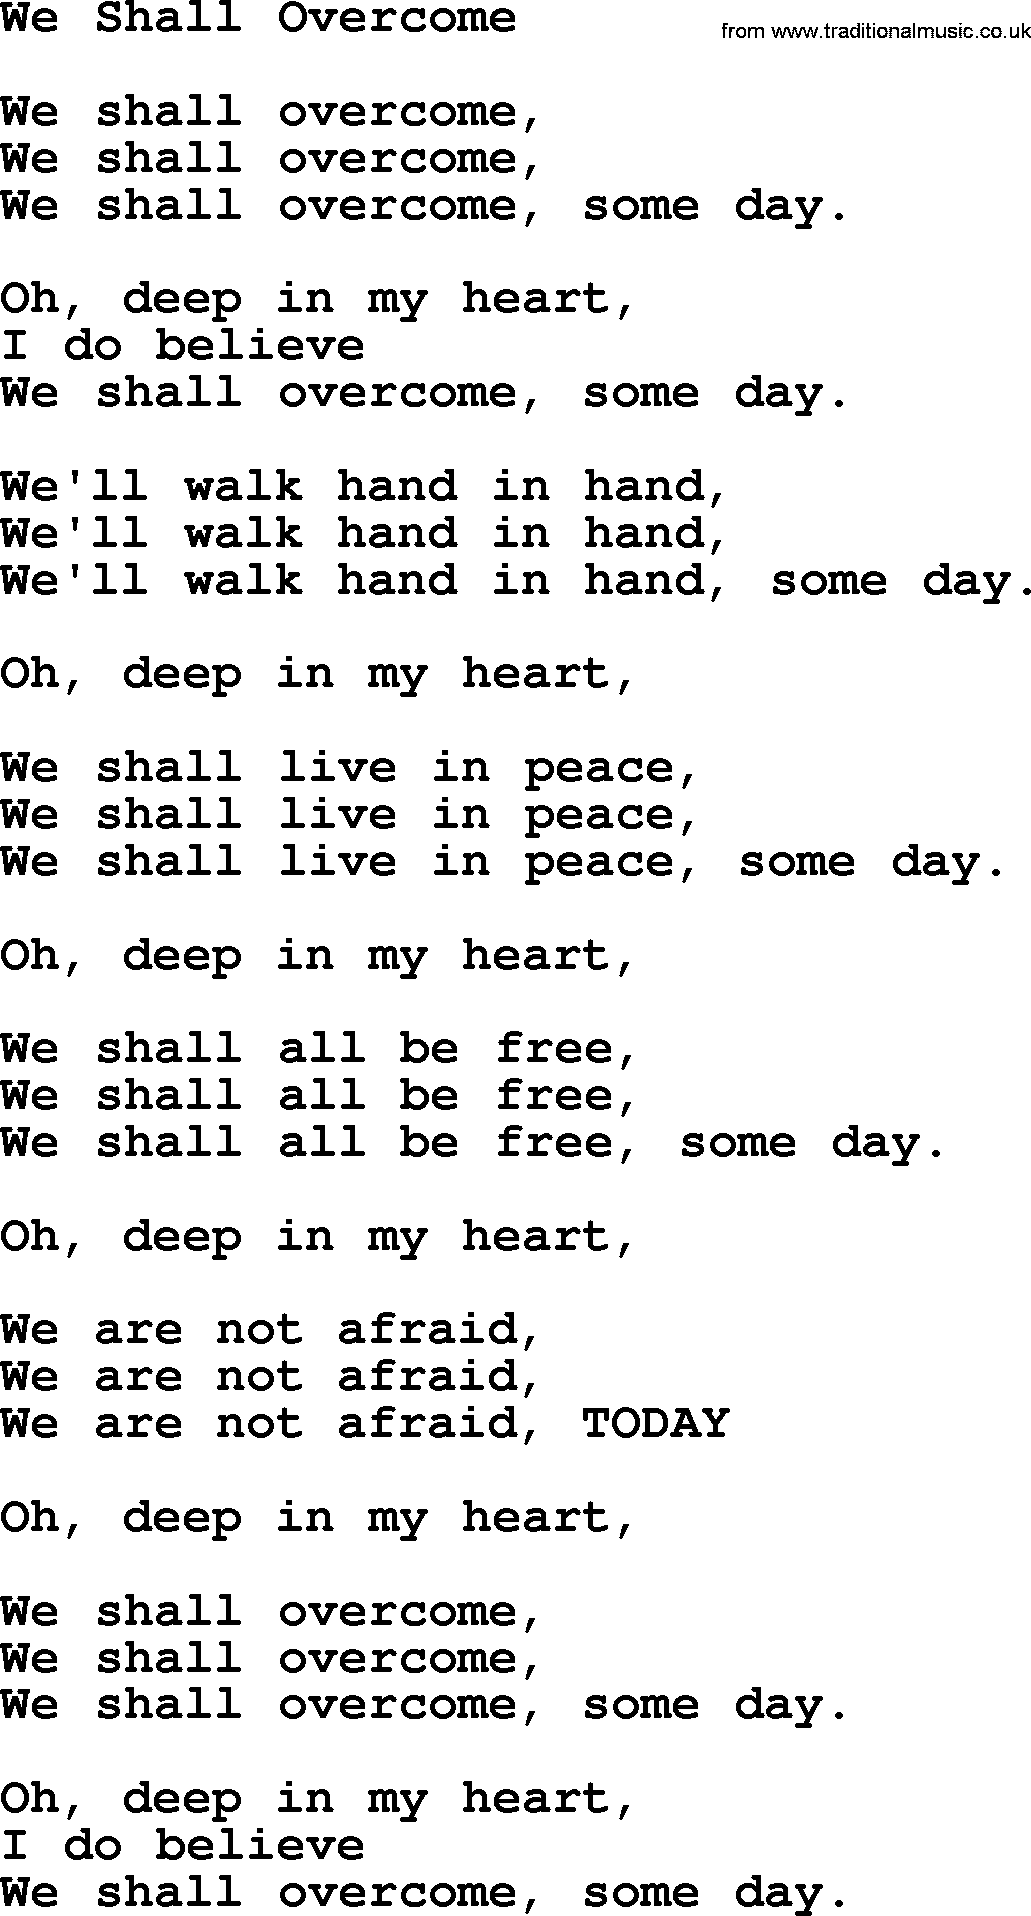 Joan Baez song We Shall Overcome, lyrics